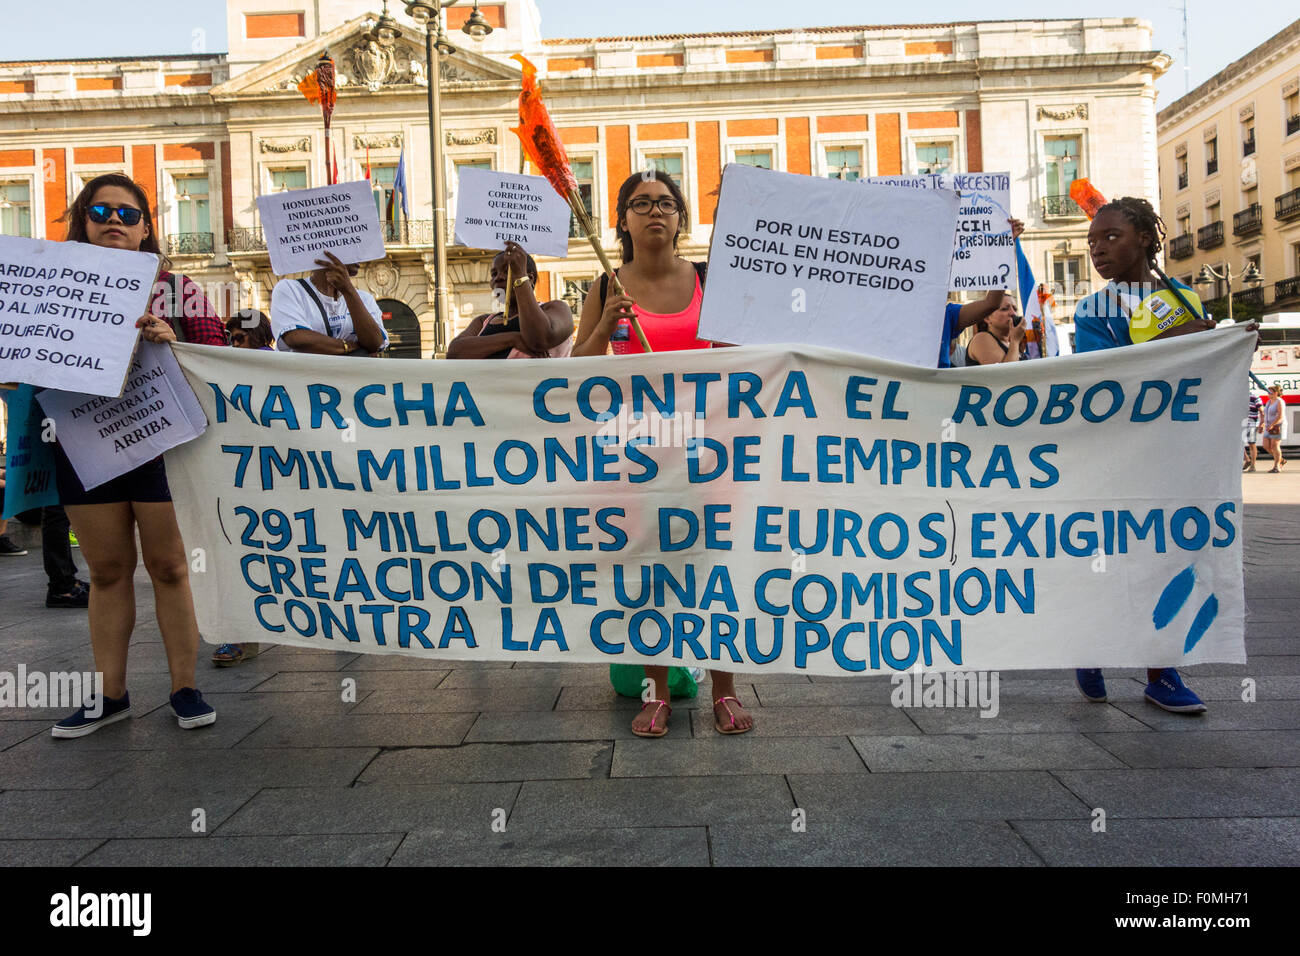 Hondurans protesting against corruption in Honduras, Puerta del Sol, Madrid, Spain Stock Photo